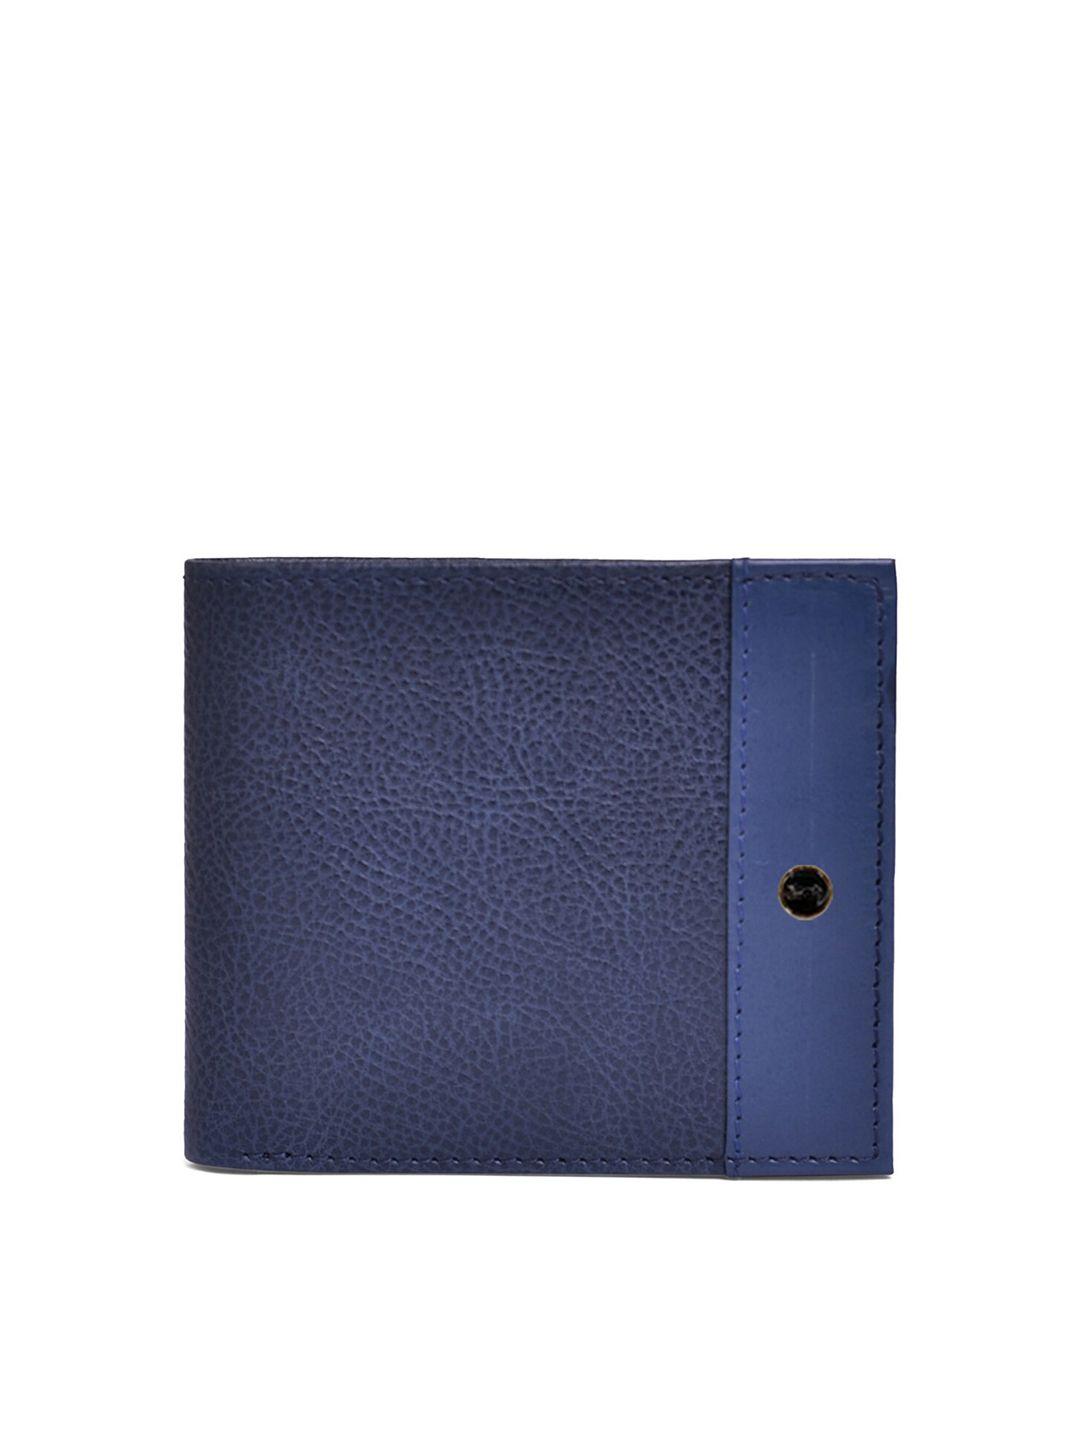 belwaba men navy blue textured leather two fold wallet